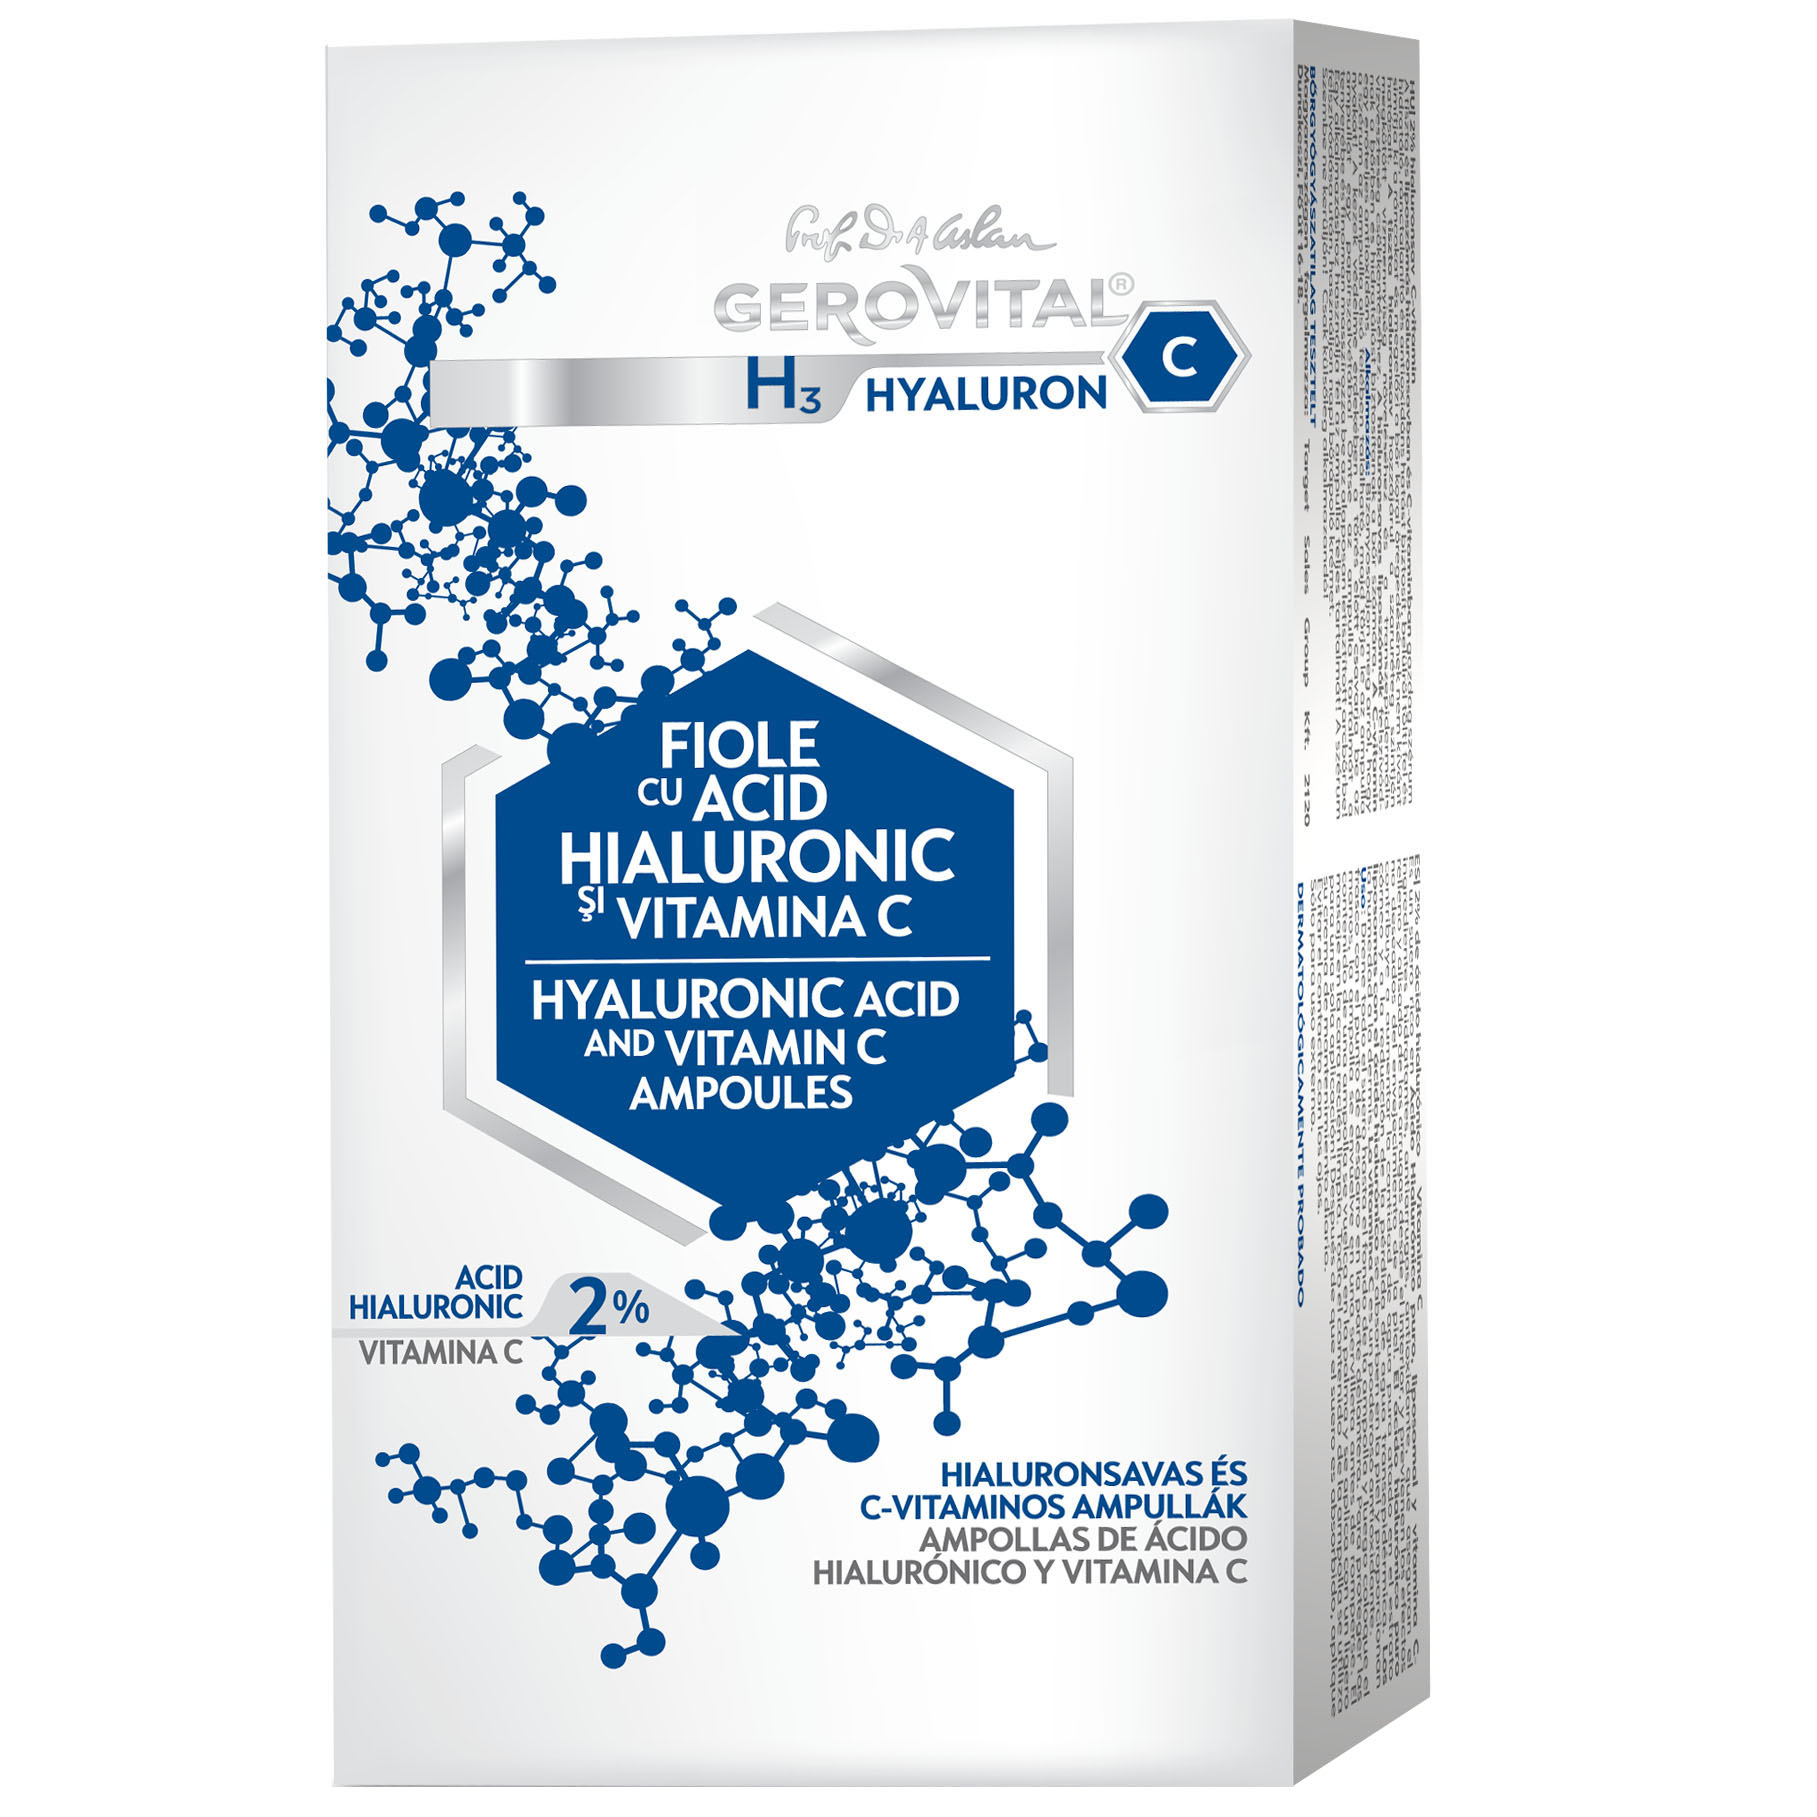 Fiole cu Acid Hialuronic 5% - Gerovital H3 Evolution